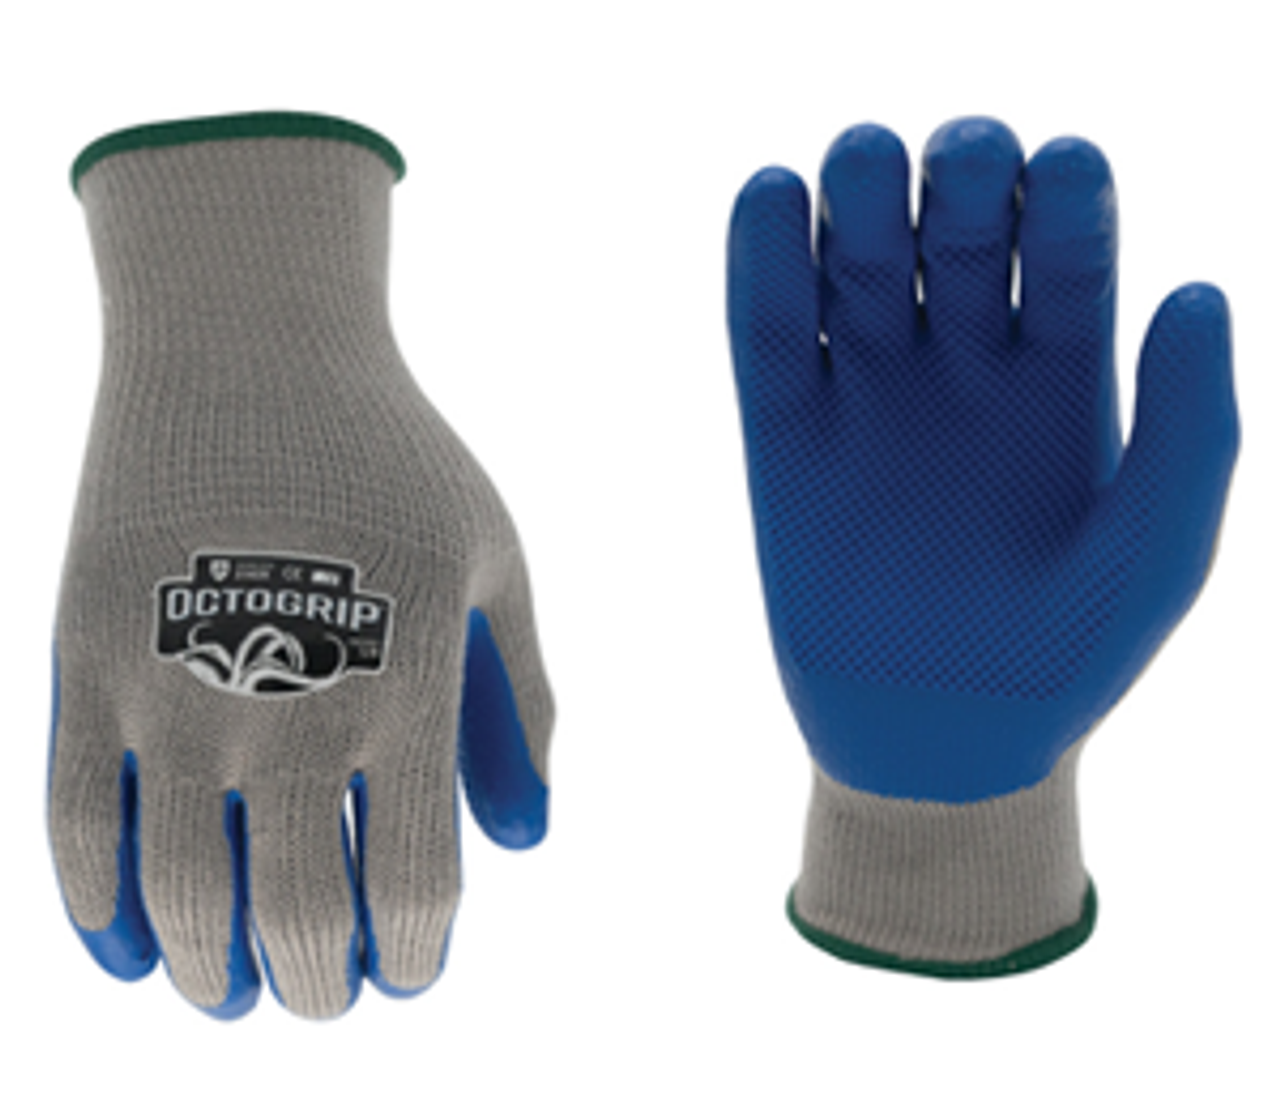 Octogrip OG300 Gloves - Pair - XL